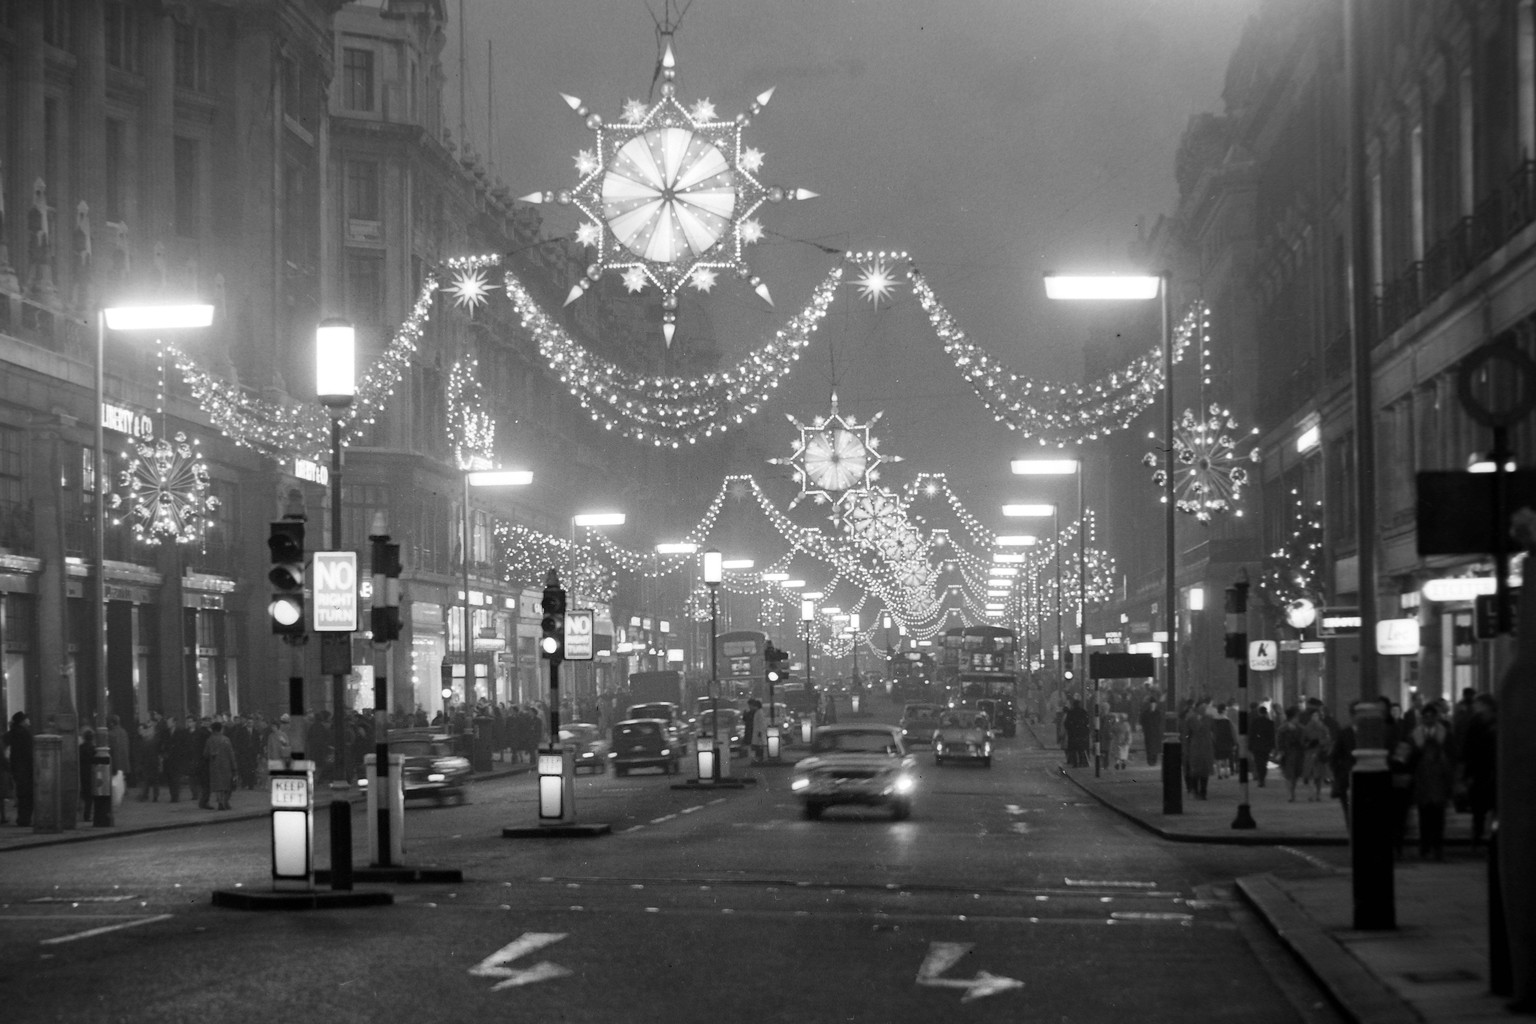 REGENTS STEET CHRISTMAS LIGHTS ILLUMINATION IN LONDON ; 30 NOVEMBER 1963, Copyright: Topfoto PUBLICATIONxINxGERxSUIxAUTxONLY UnitedArchivesIPU467712